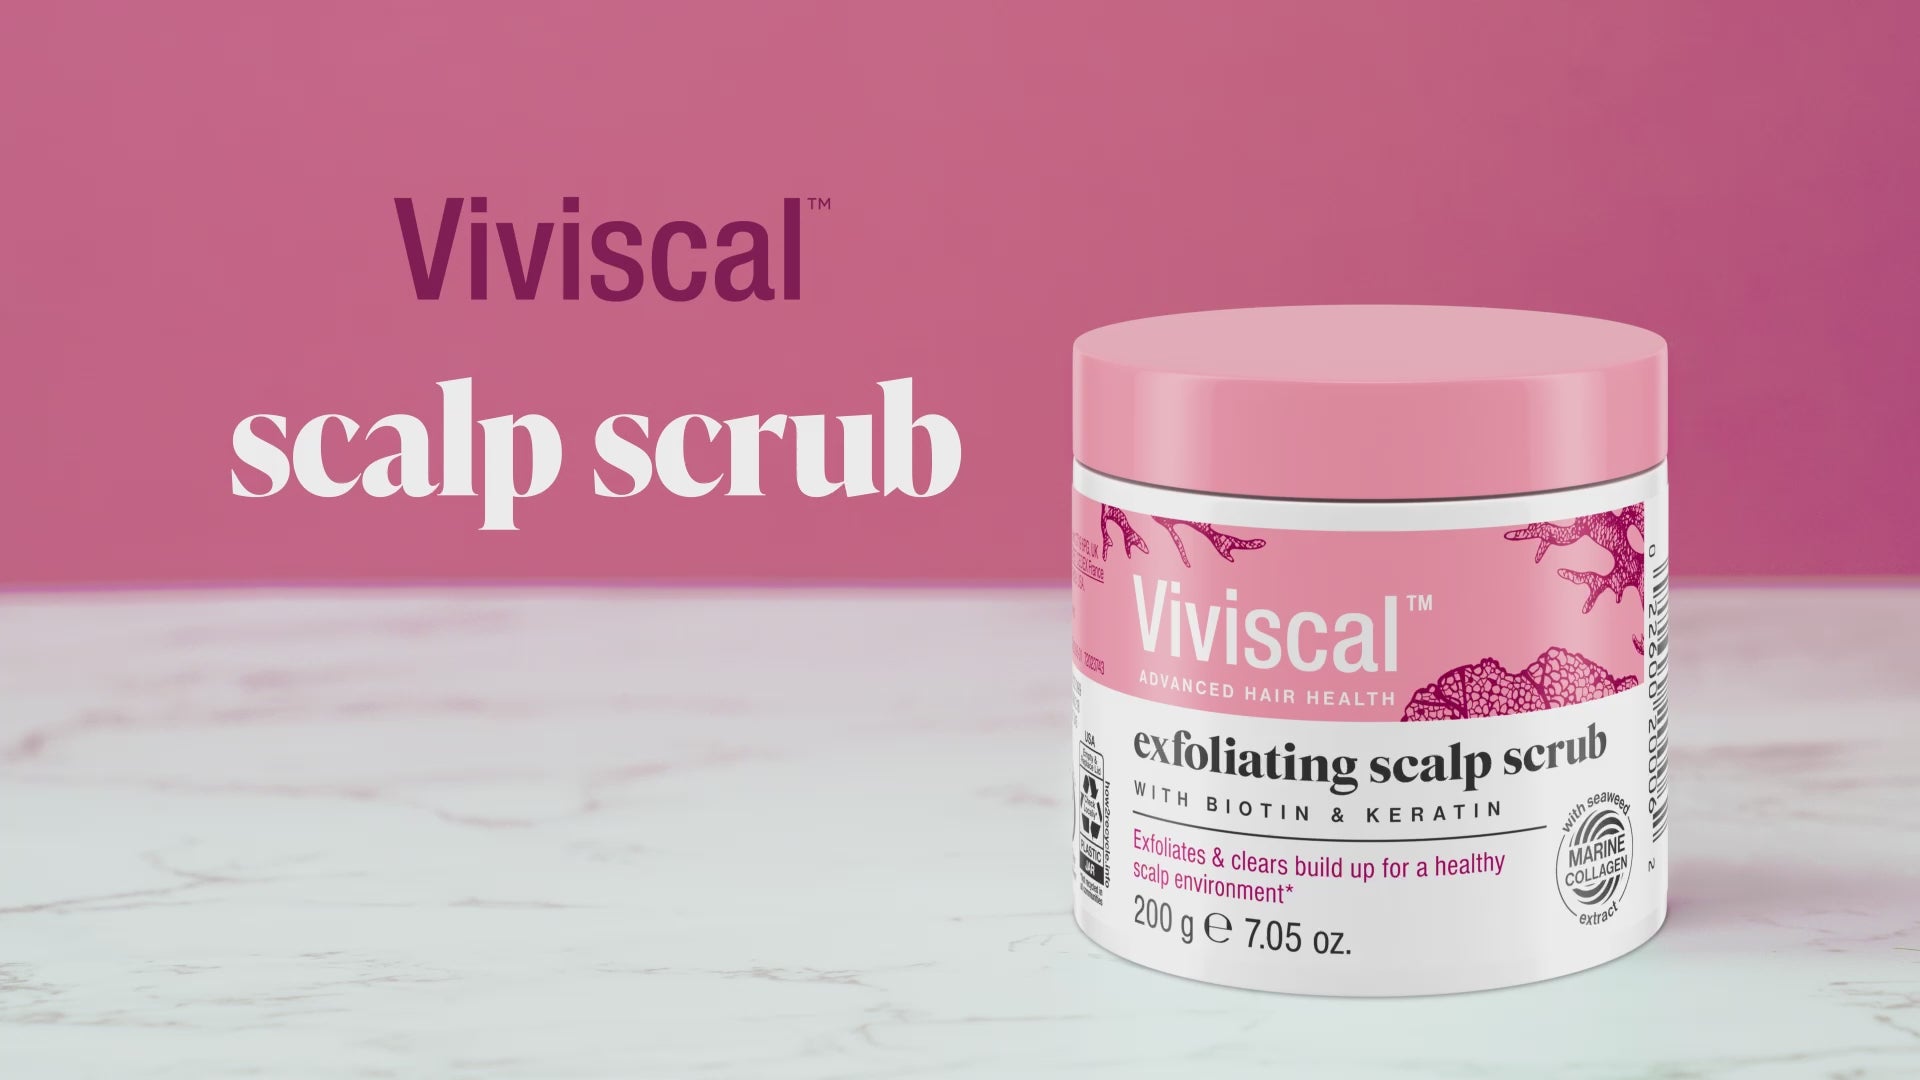 video of Viviscal exfoliating scalp scrub application